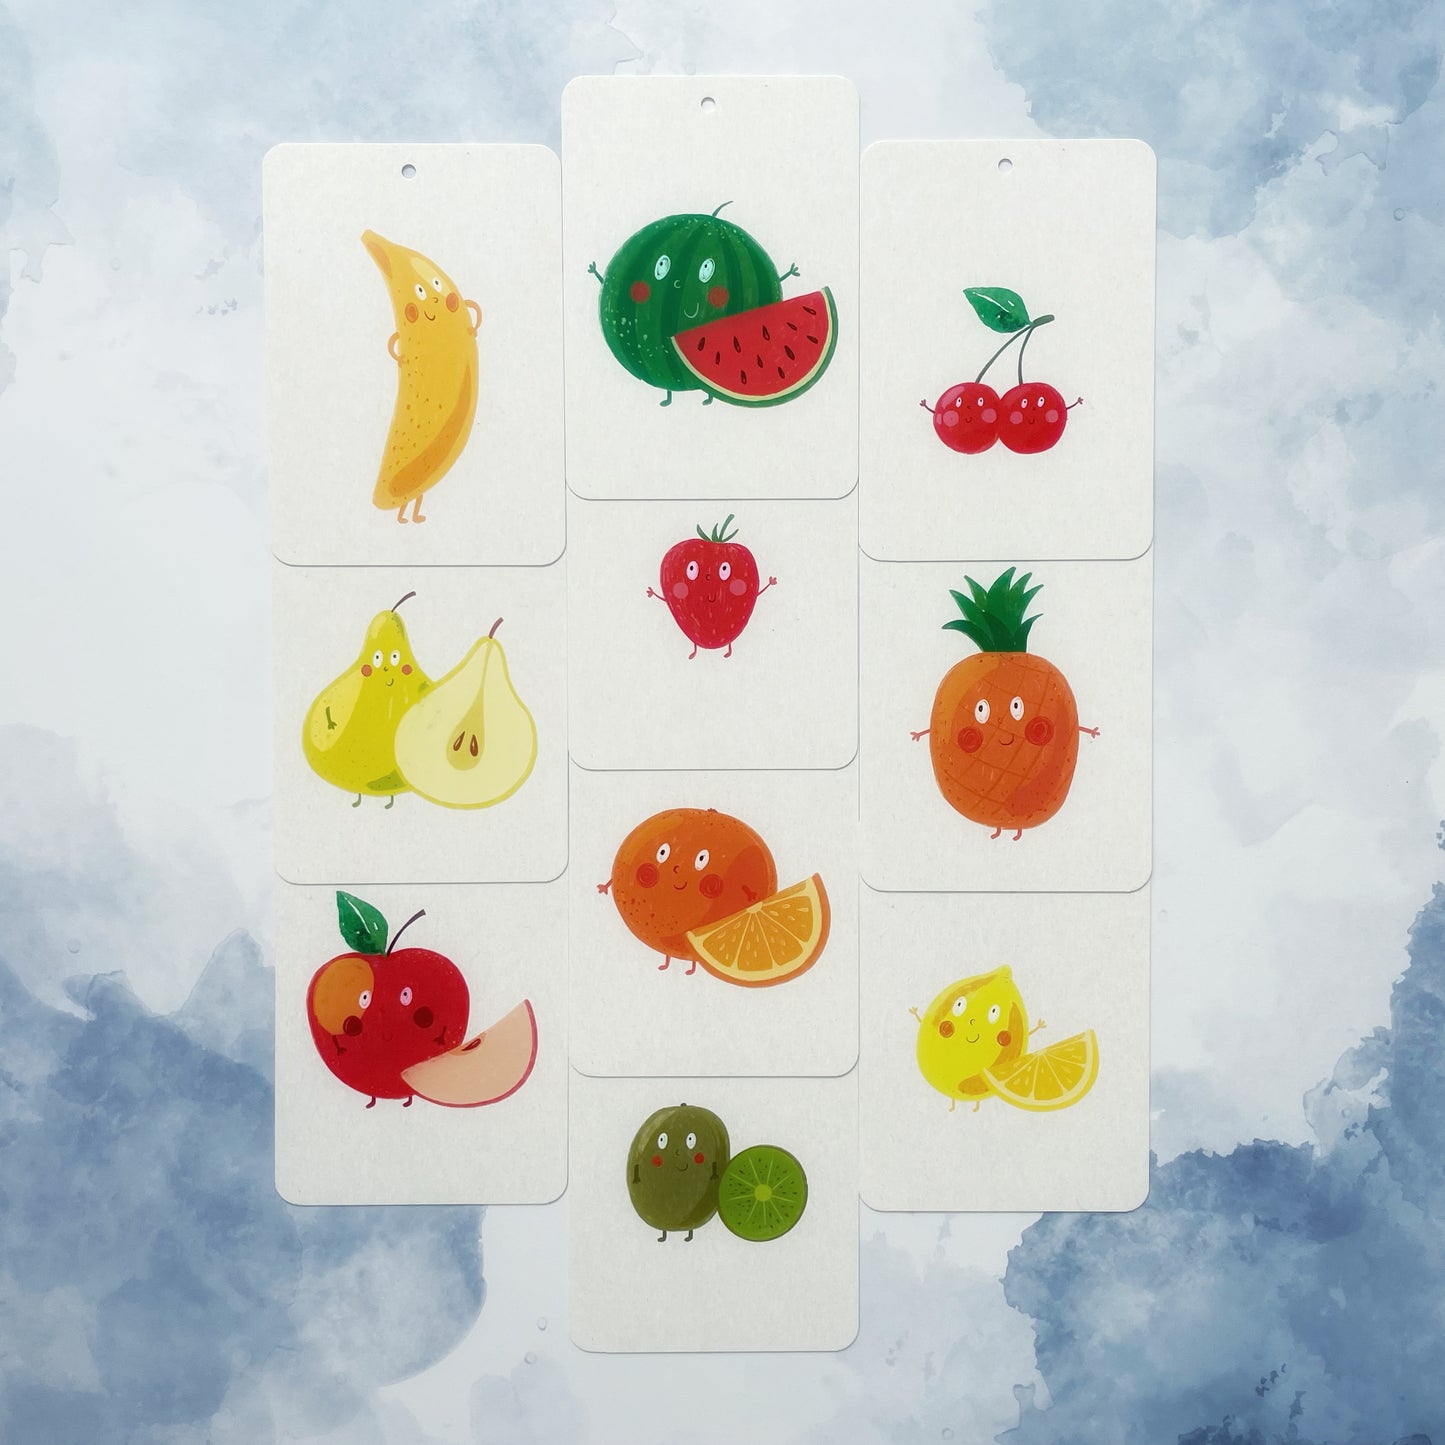 Flashkaarten 'Fruit'